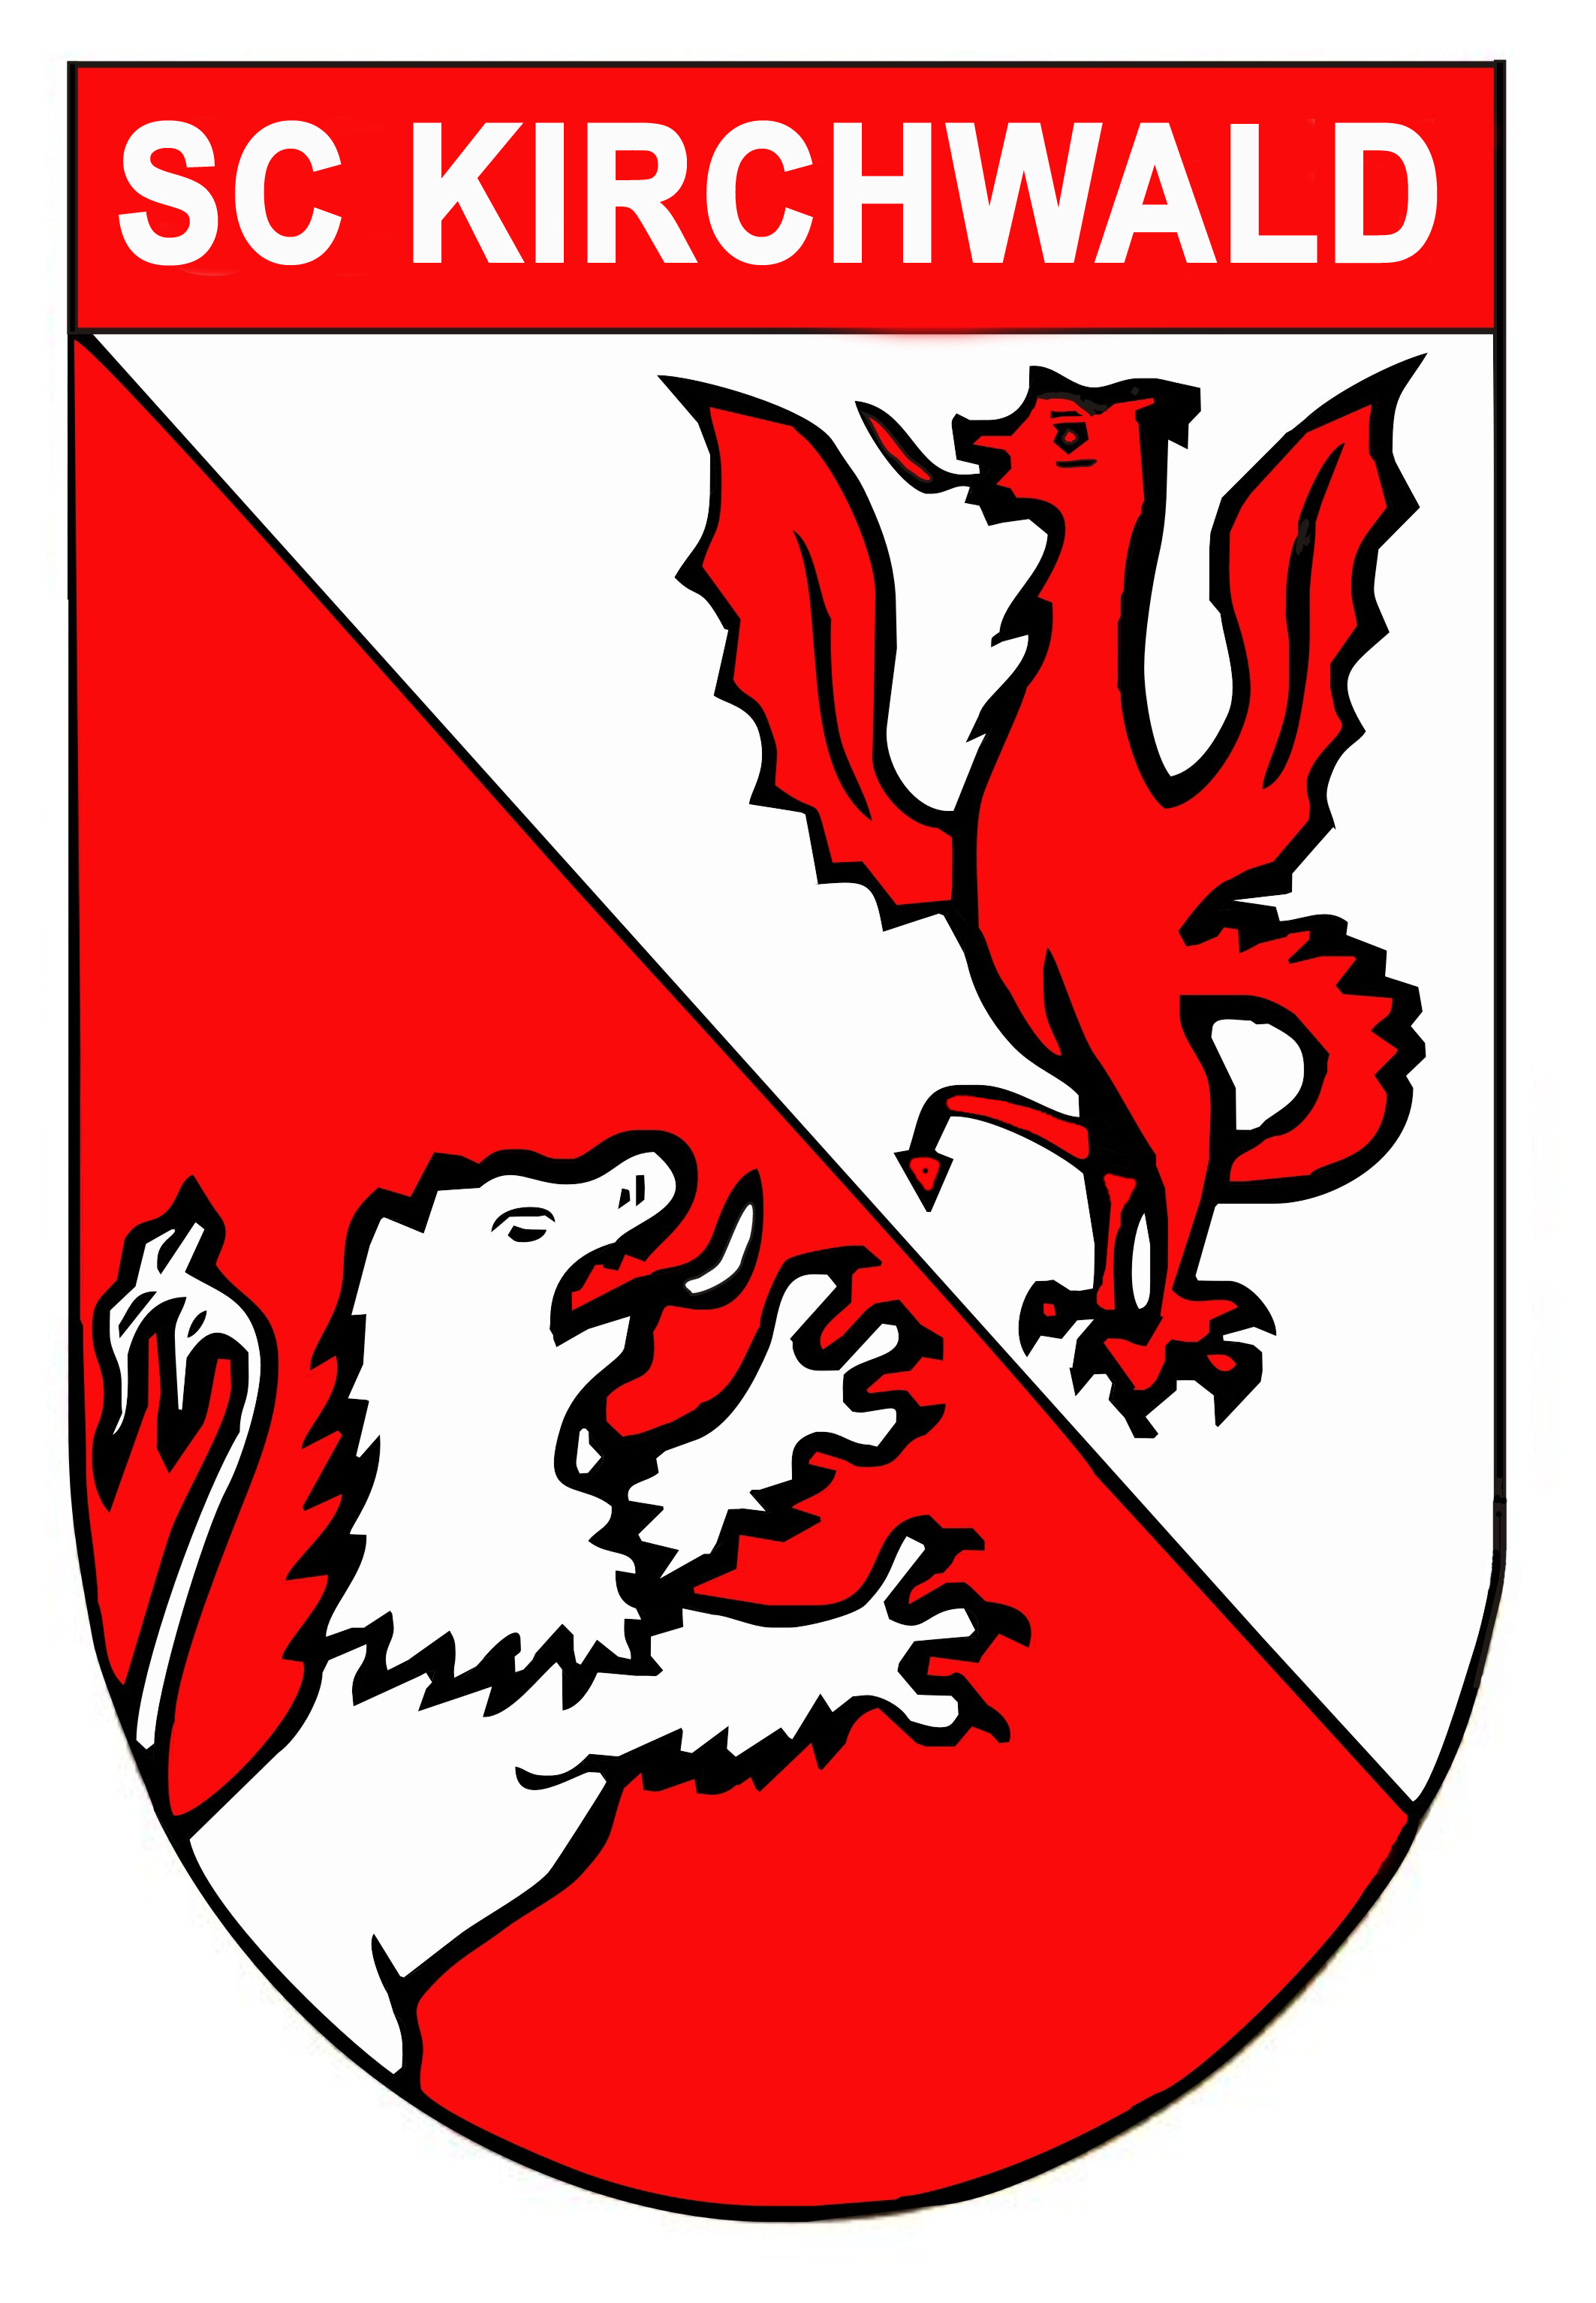 SC Kirchwald